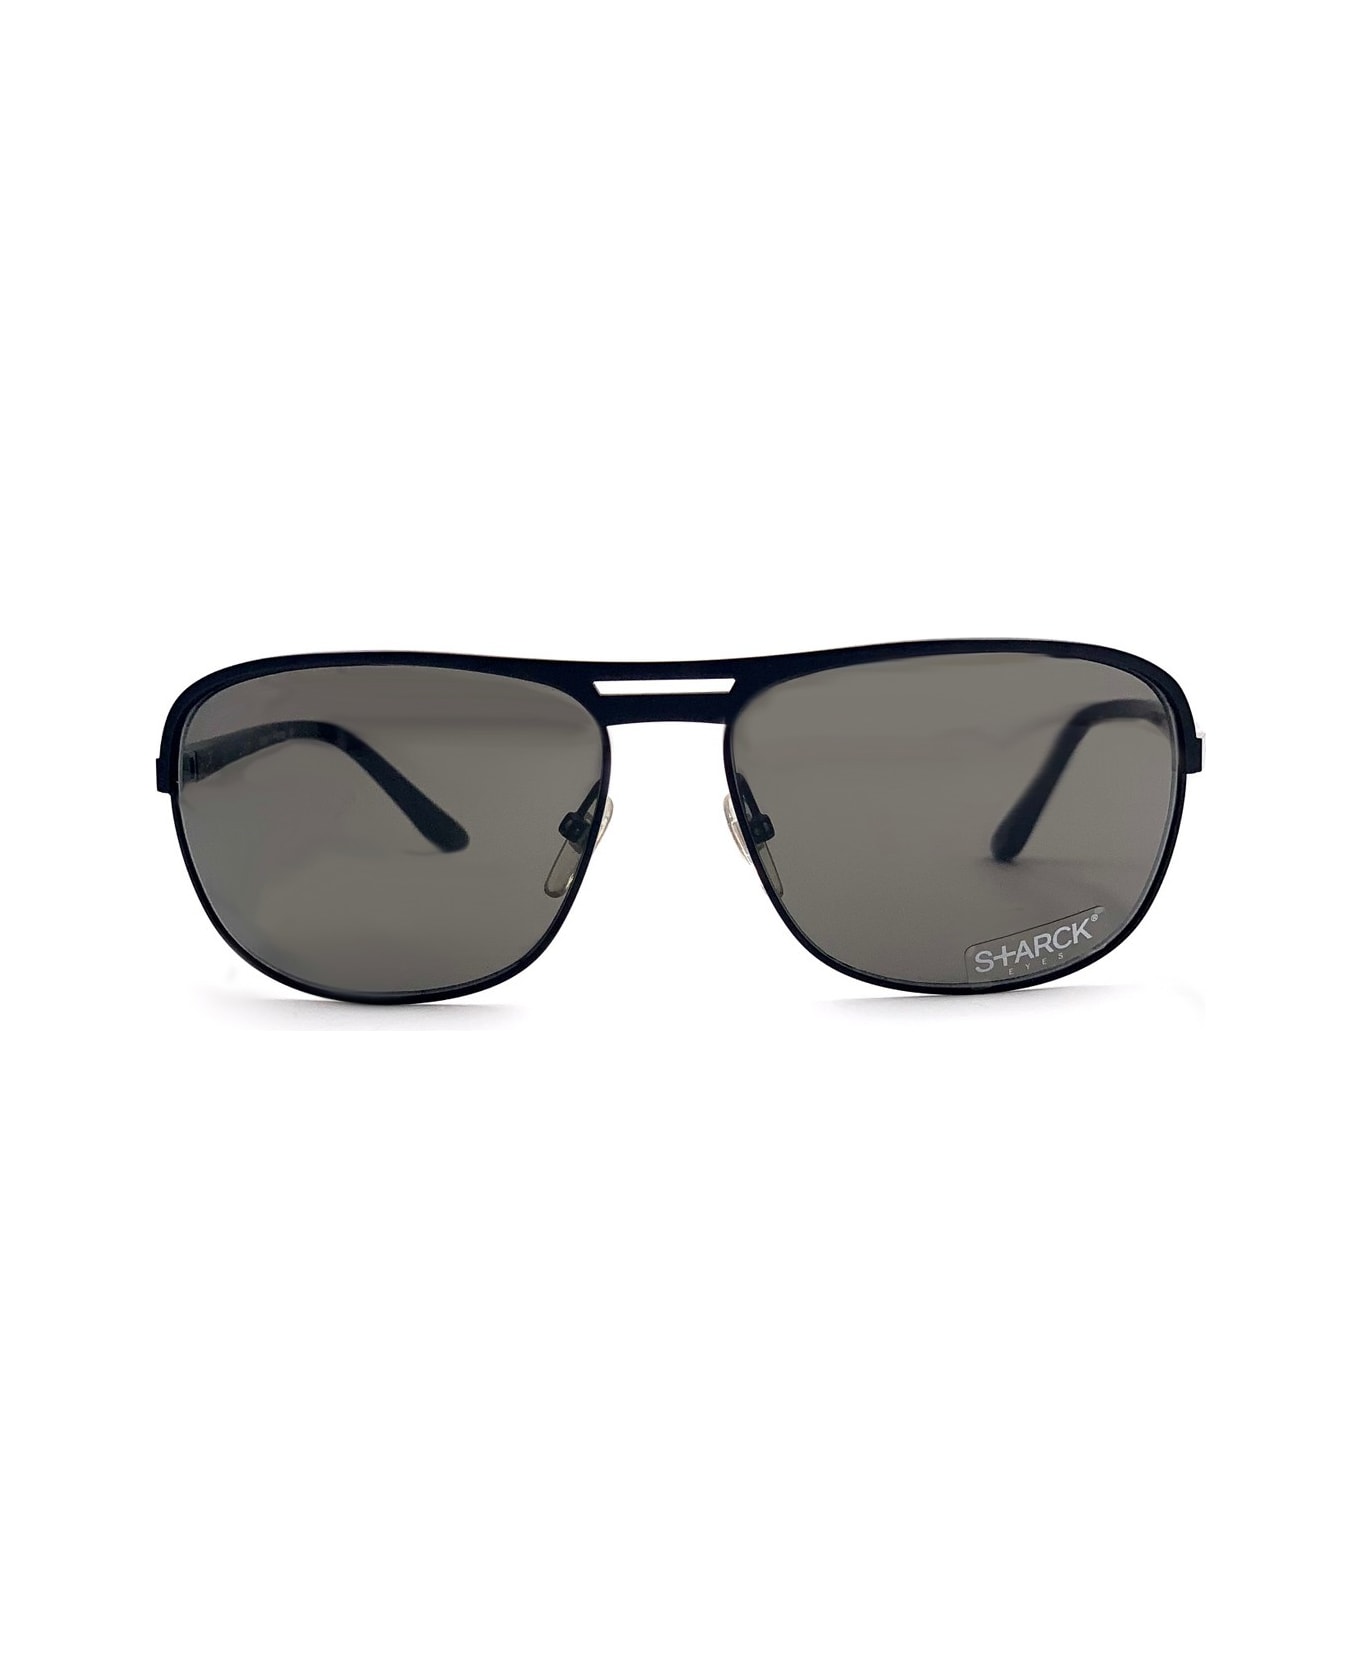 Philippe Starck Starck Pl 1251 Sunglasses Maui - Nero